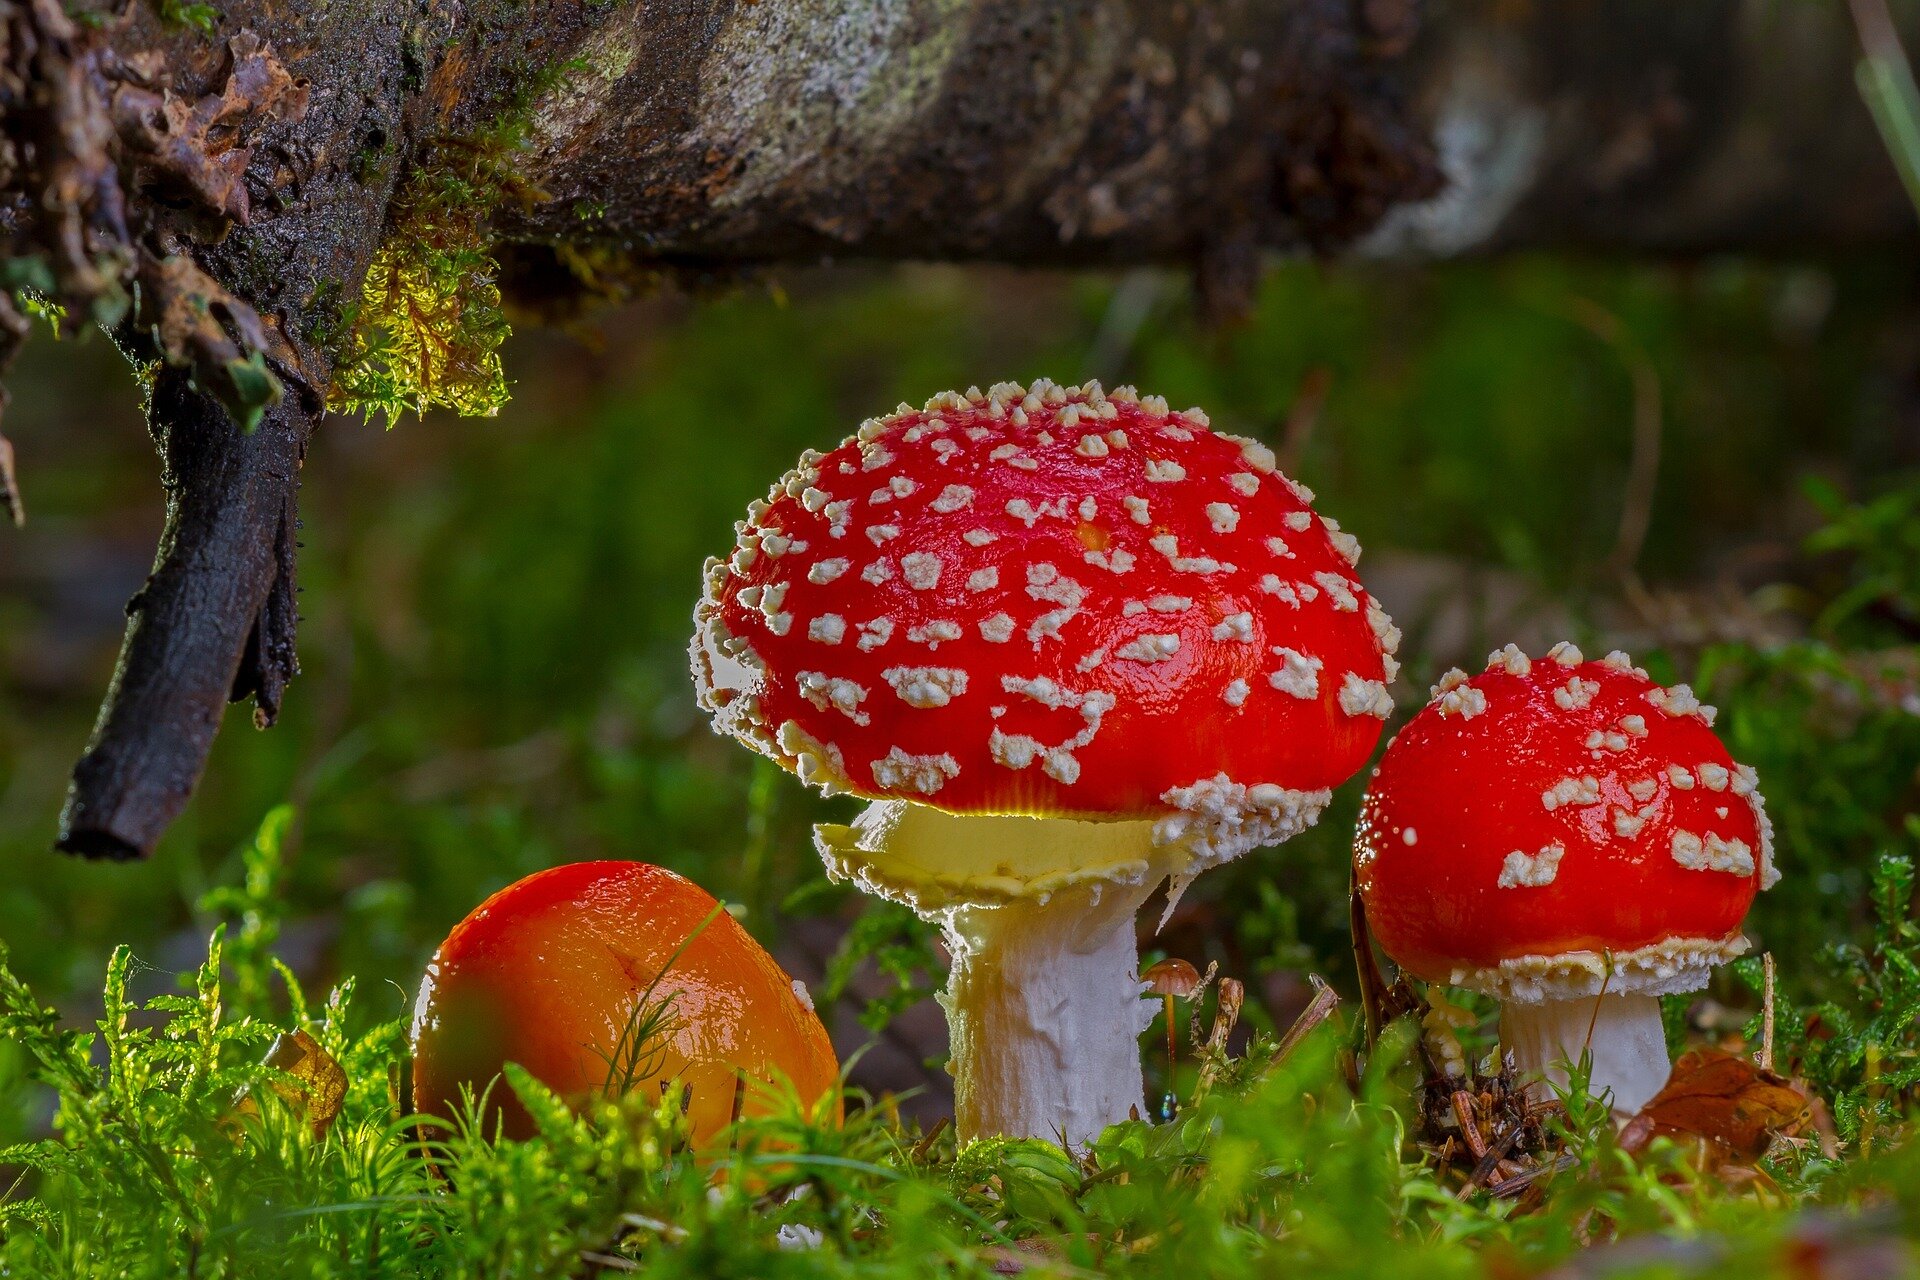 Mushrooms as Nature’s Medicine Cabinet in Treating Diseases